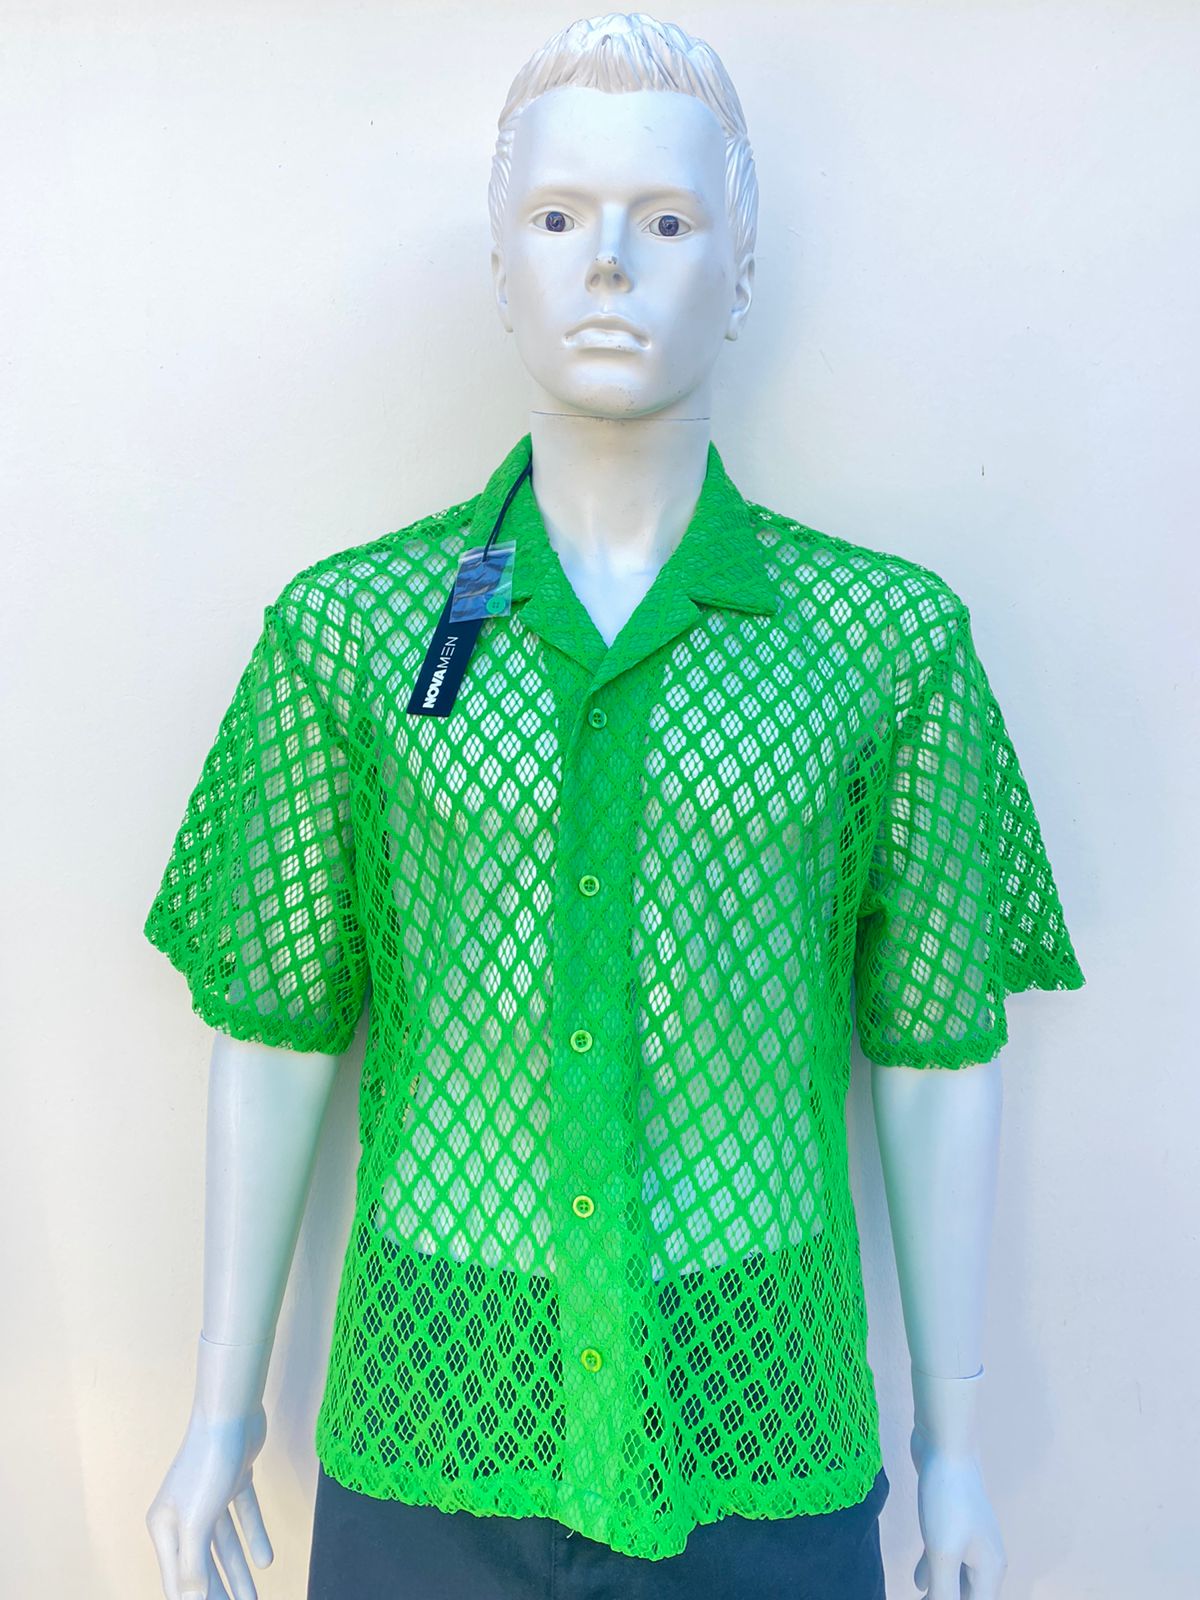 Camisa Fashion Nova original verde en estilo de malla.